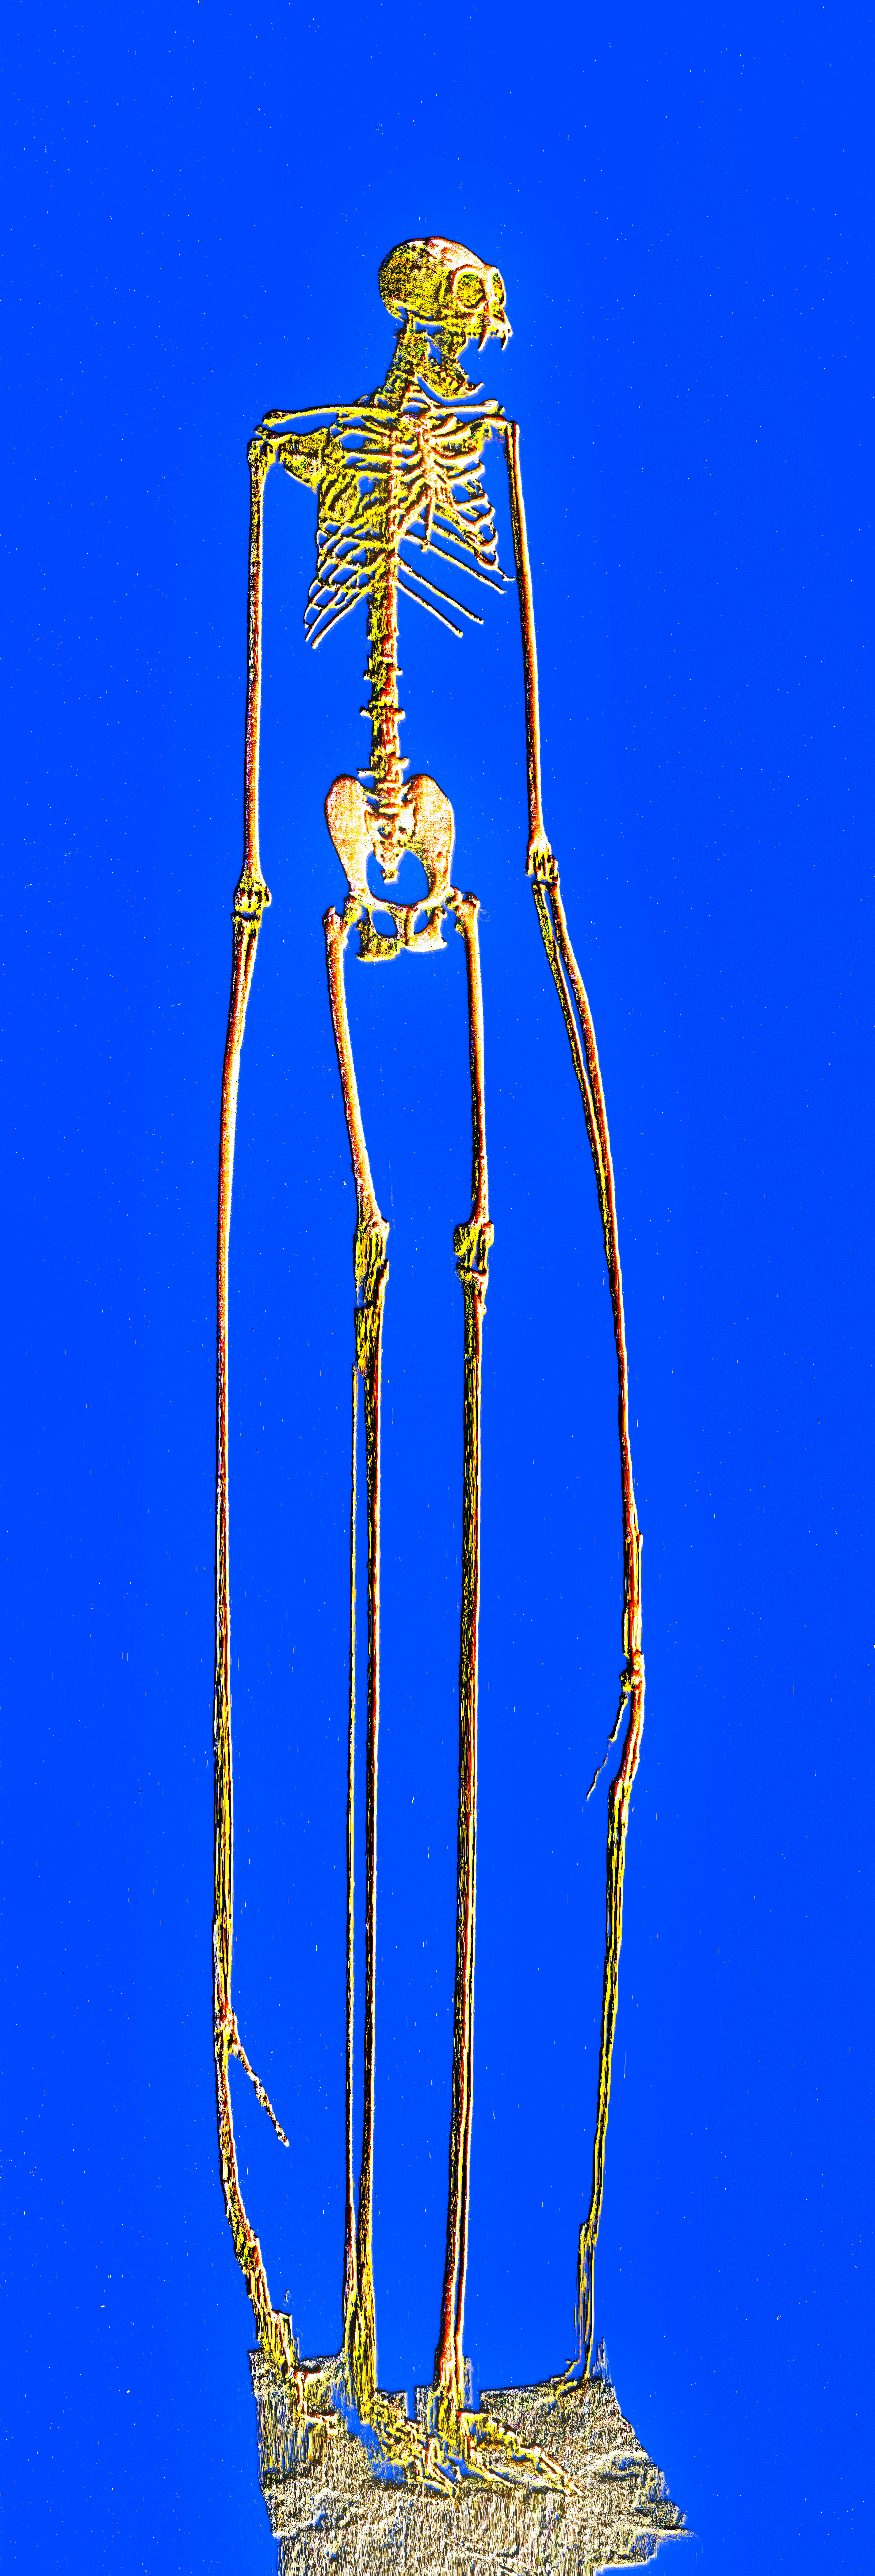 gibbon's skeleton